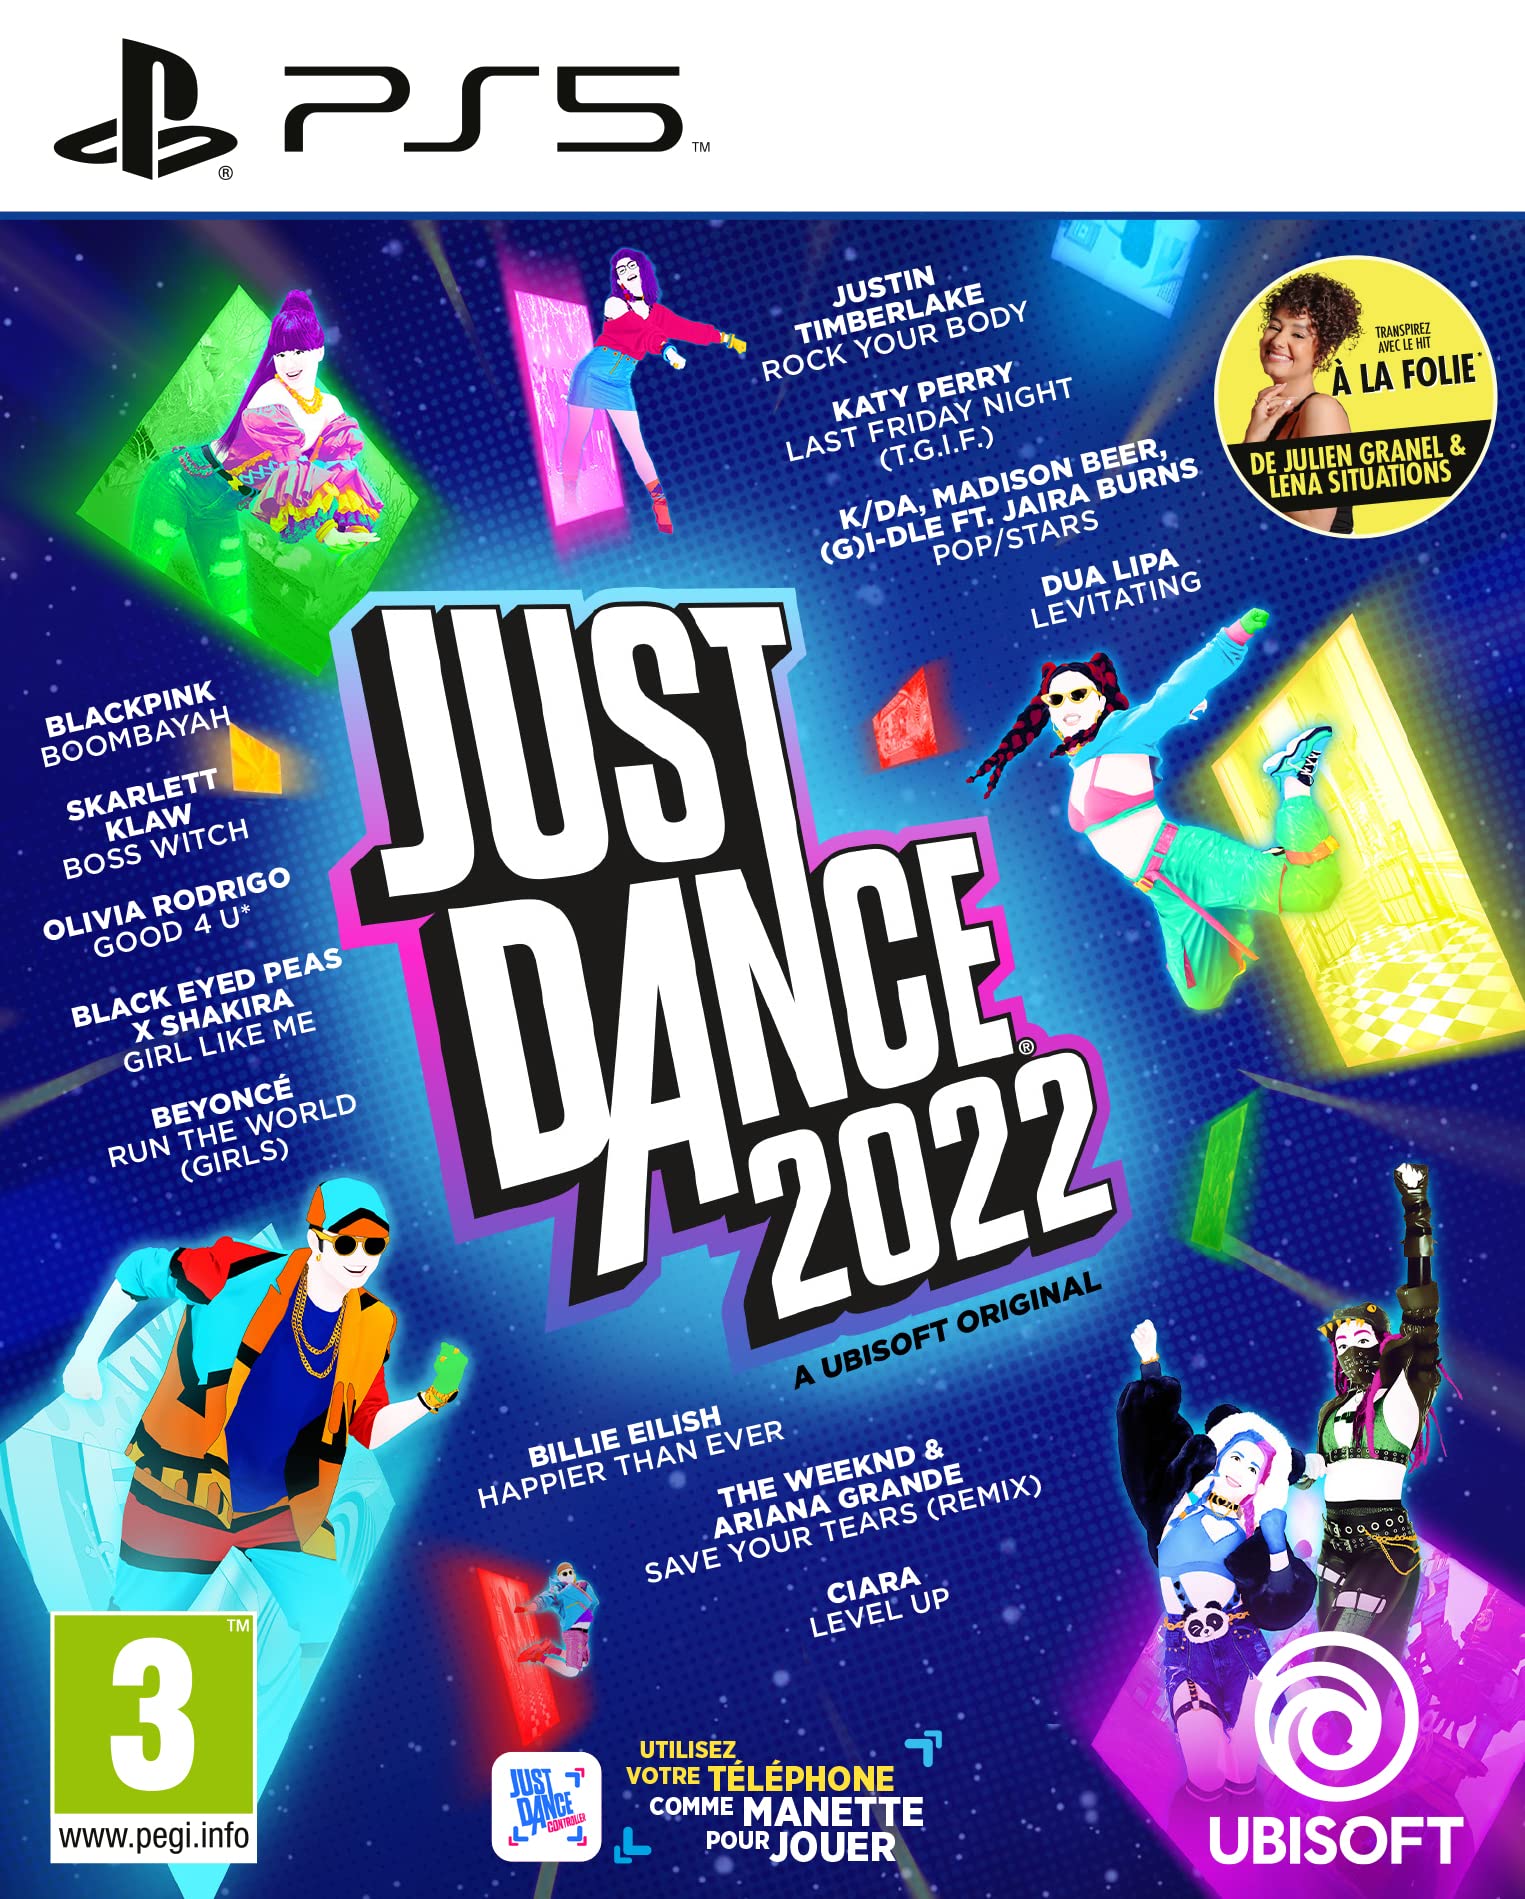 vente chaude Just Dance 2022, Ps5 FQoXgHMtF juste de l&